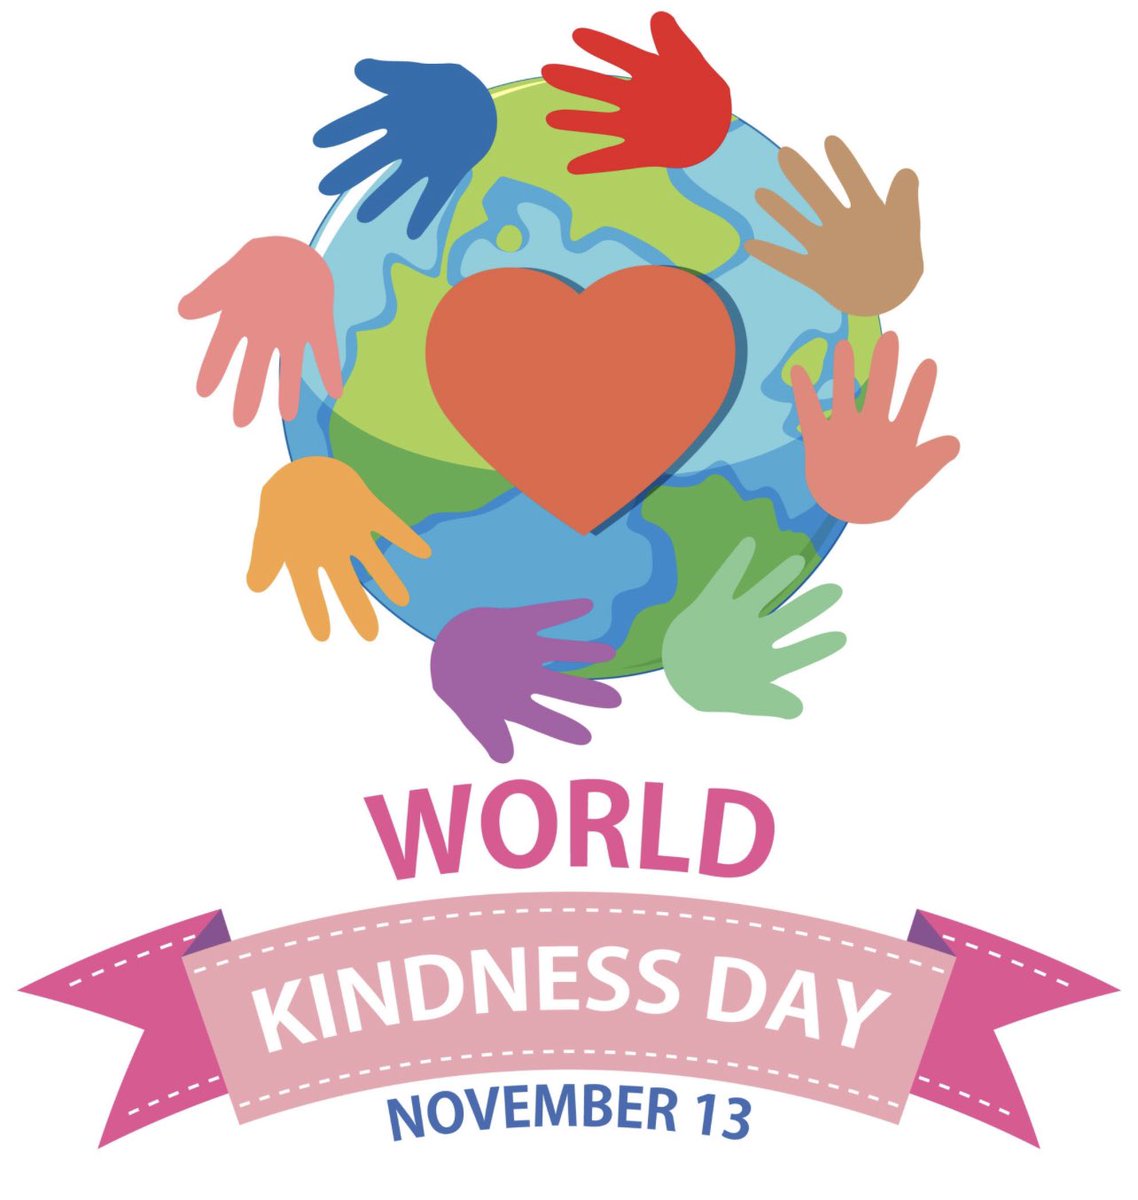 Happy World Kindness Day!!! ❤️❤️❤️#BeKind #KindnessDay